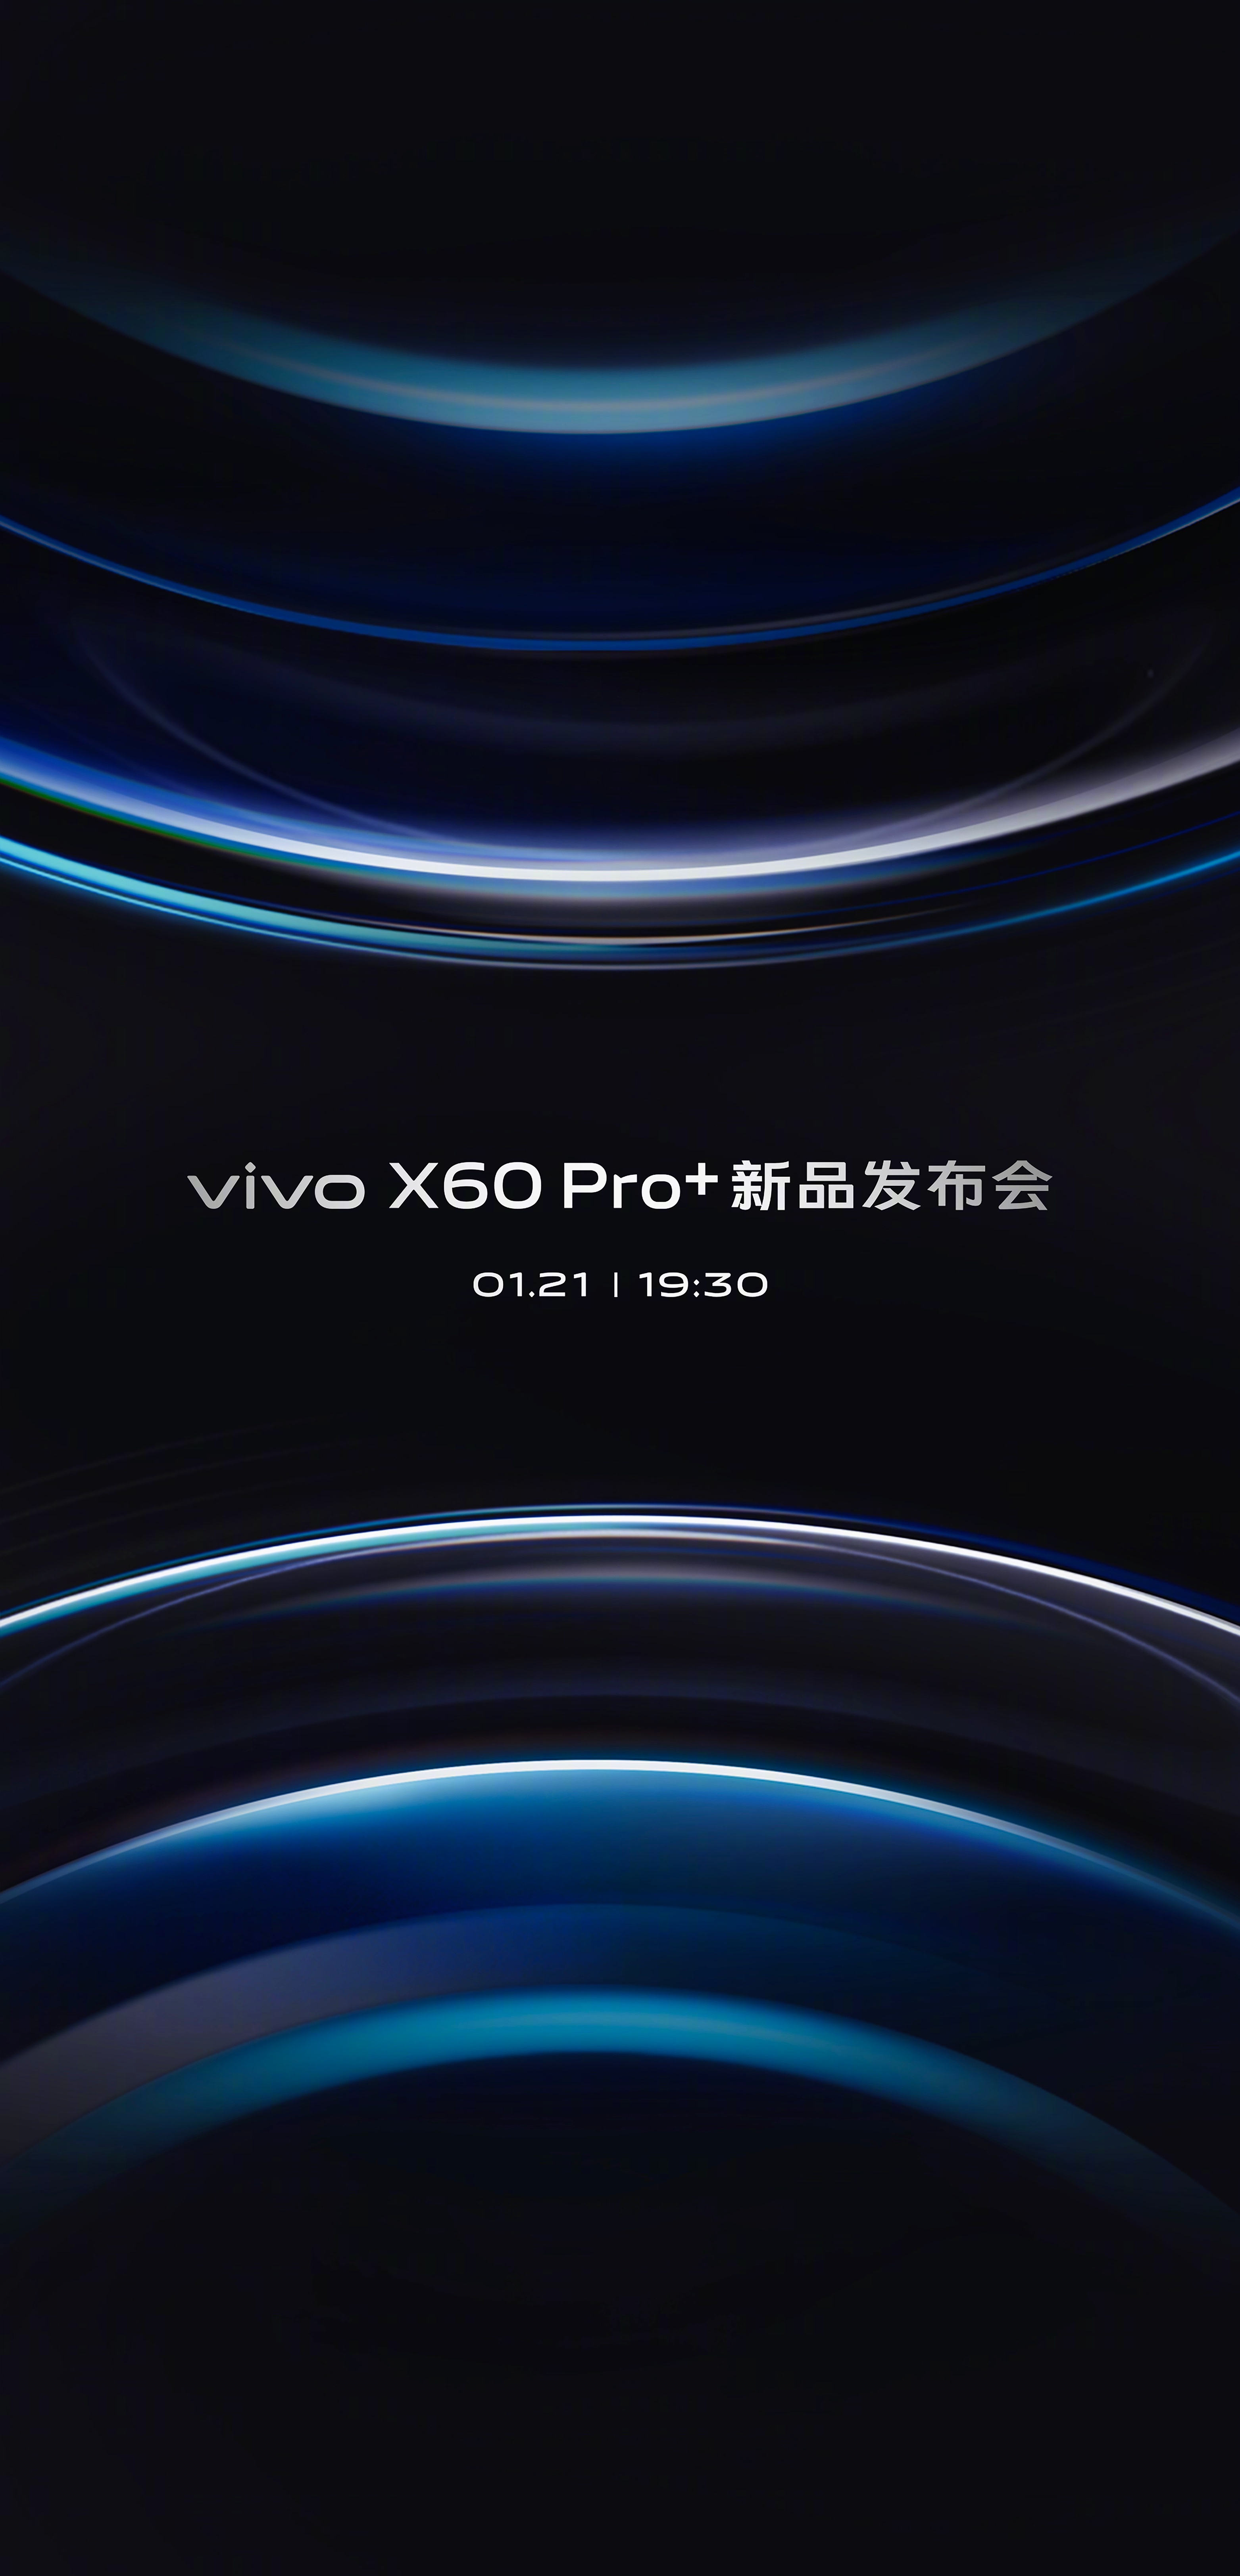  Стала известна дата анонса топового Vivo X60 Pro+ на Snapdragon 888 Другие устройства  - vivo_rassekretila_datu_anonsa_topovogo_x60_pro_na_snapdragon_888_picture2_0